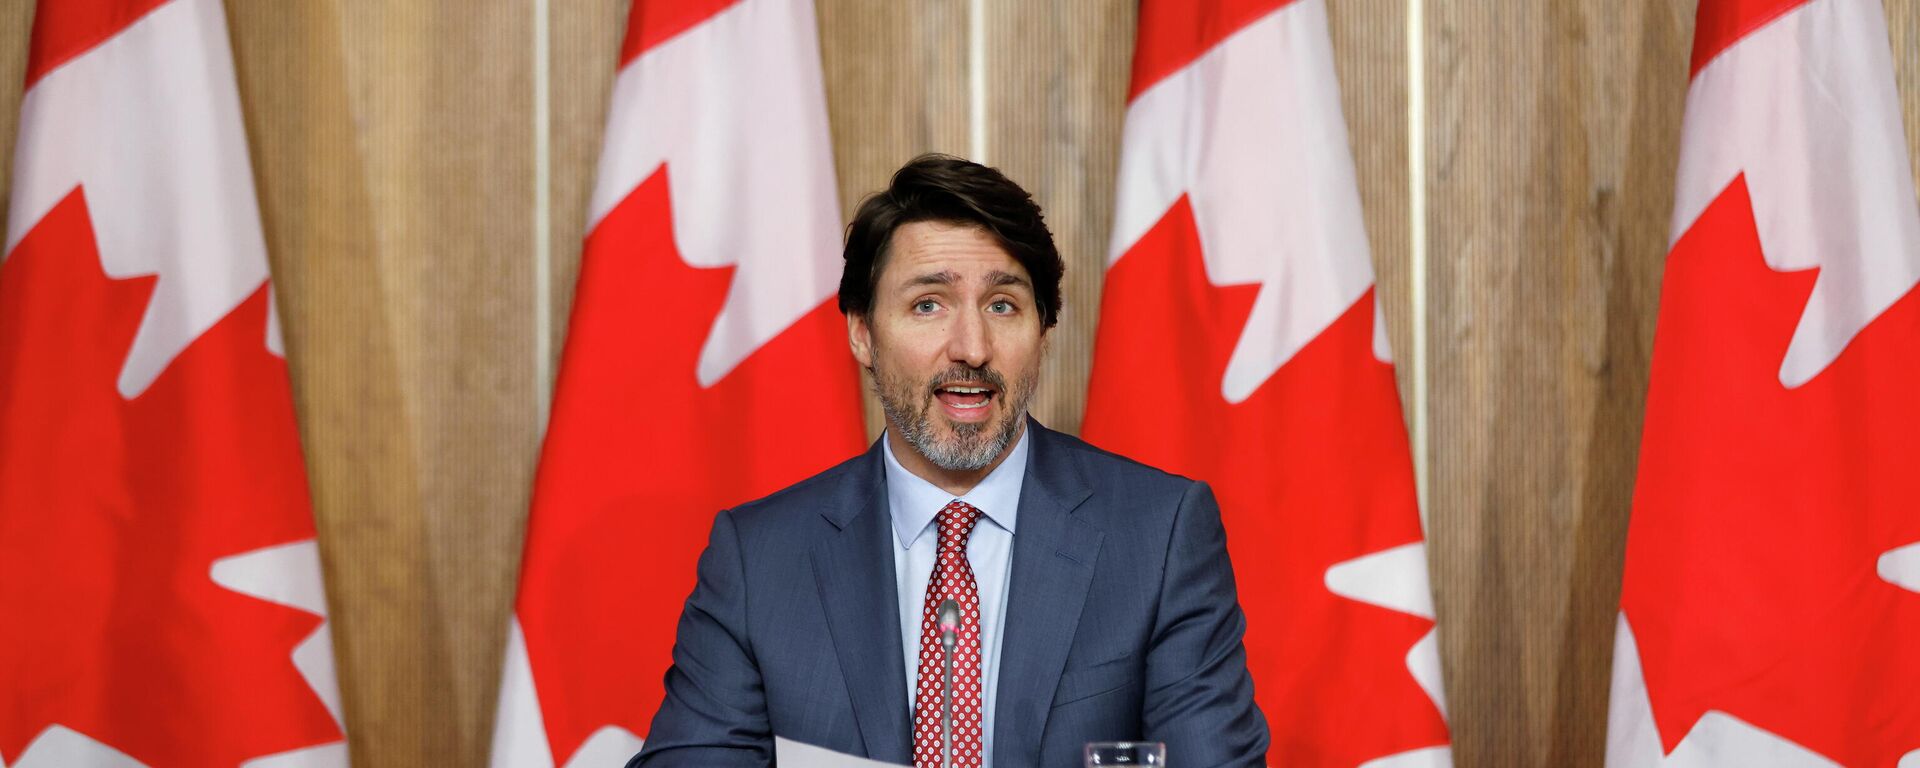 El primer ministro canadiense Justin Trudeau  - Sputnik Mundo, 1920, 19.03.2021